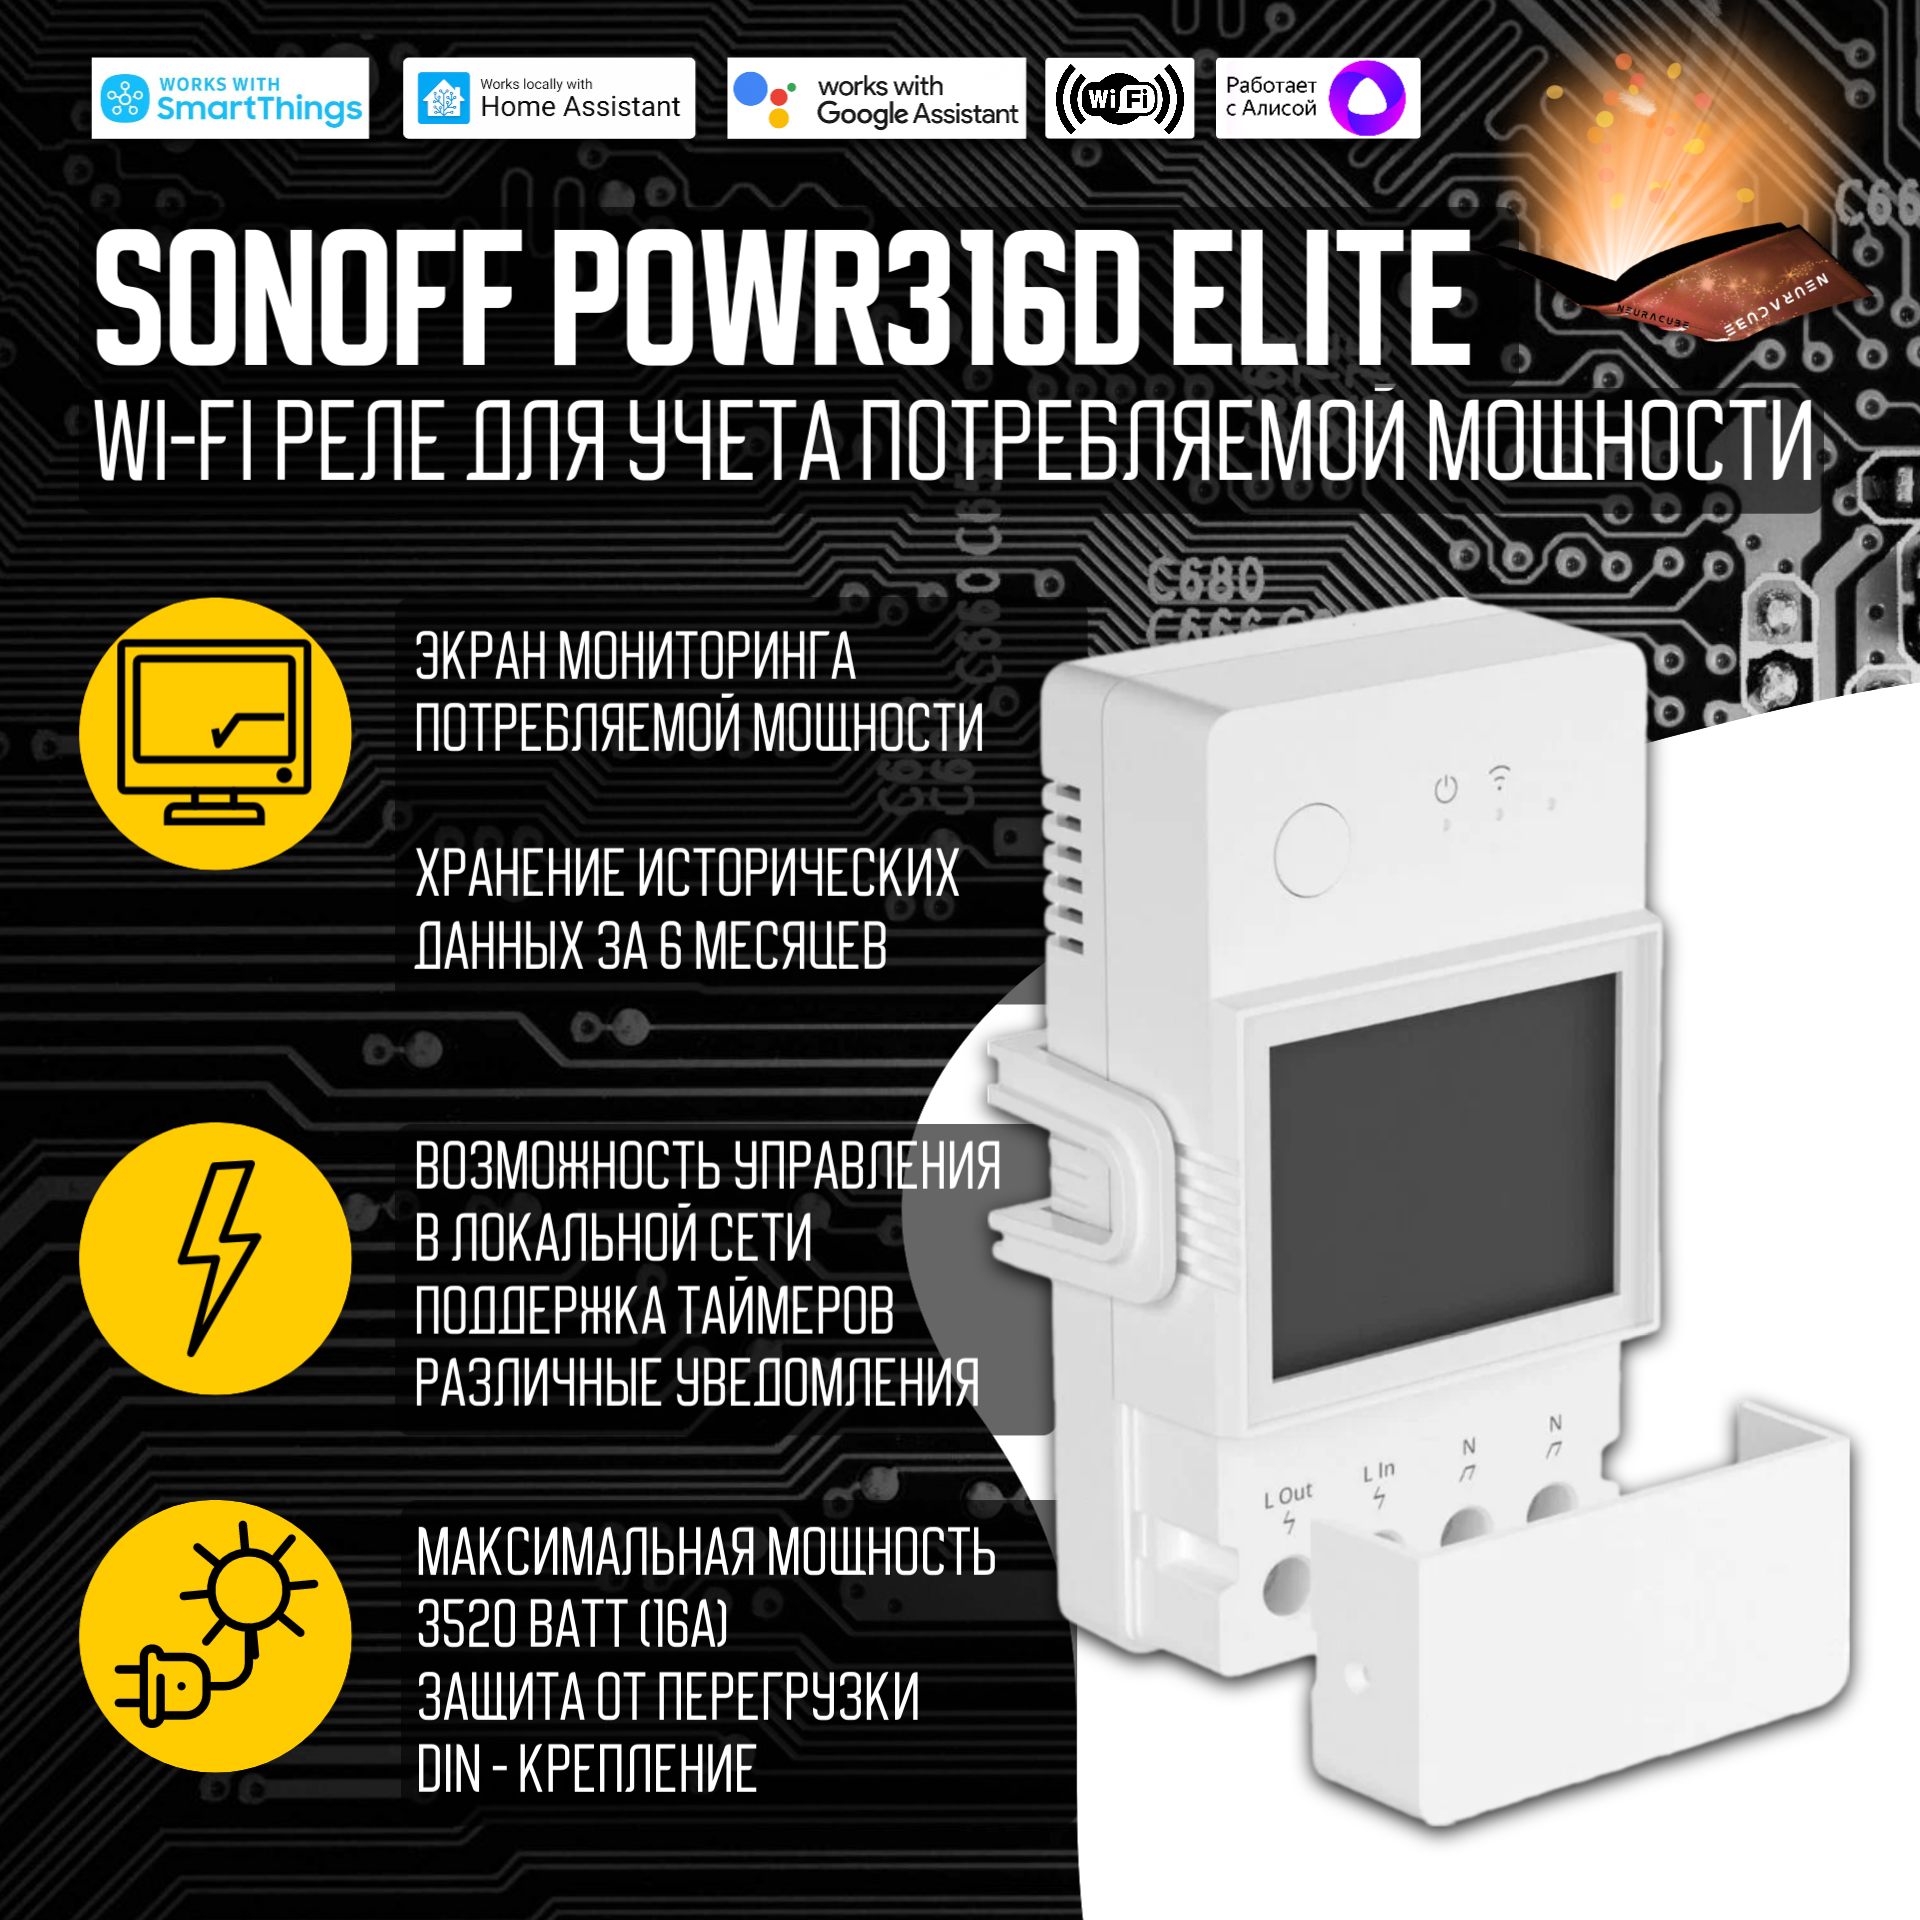 WiFi Реле Sonoff POWR316D Elite, 16А/3500Ватт (Работает с Яндекс Алисой)